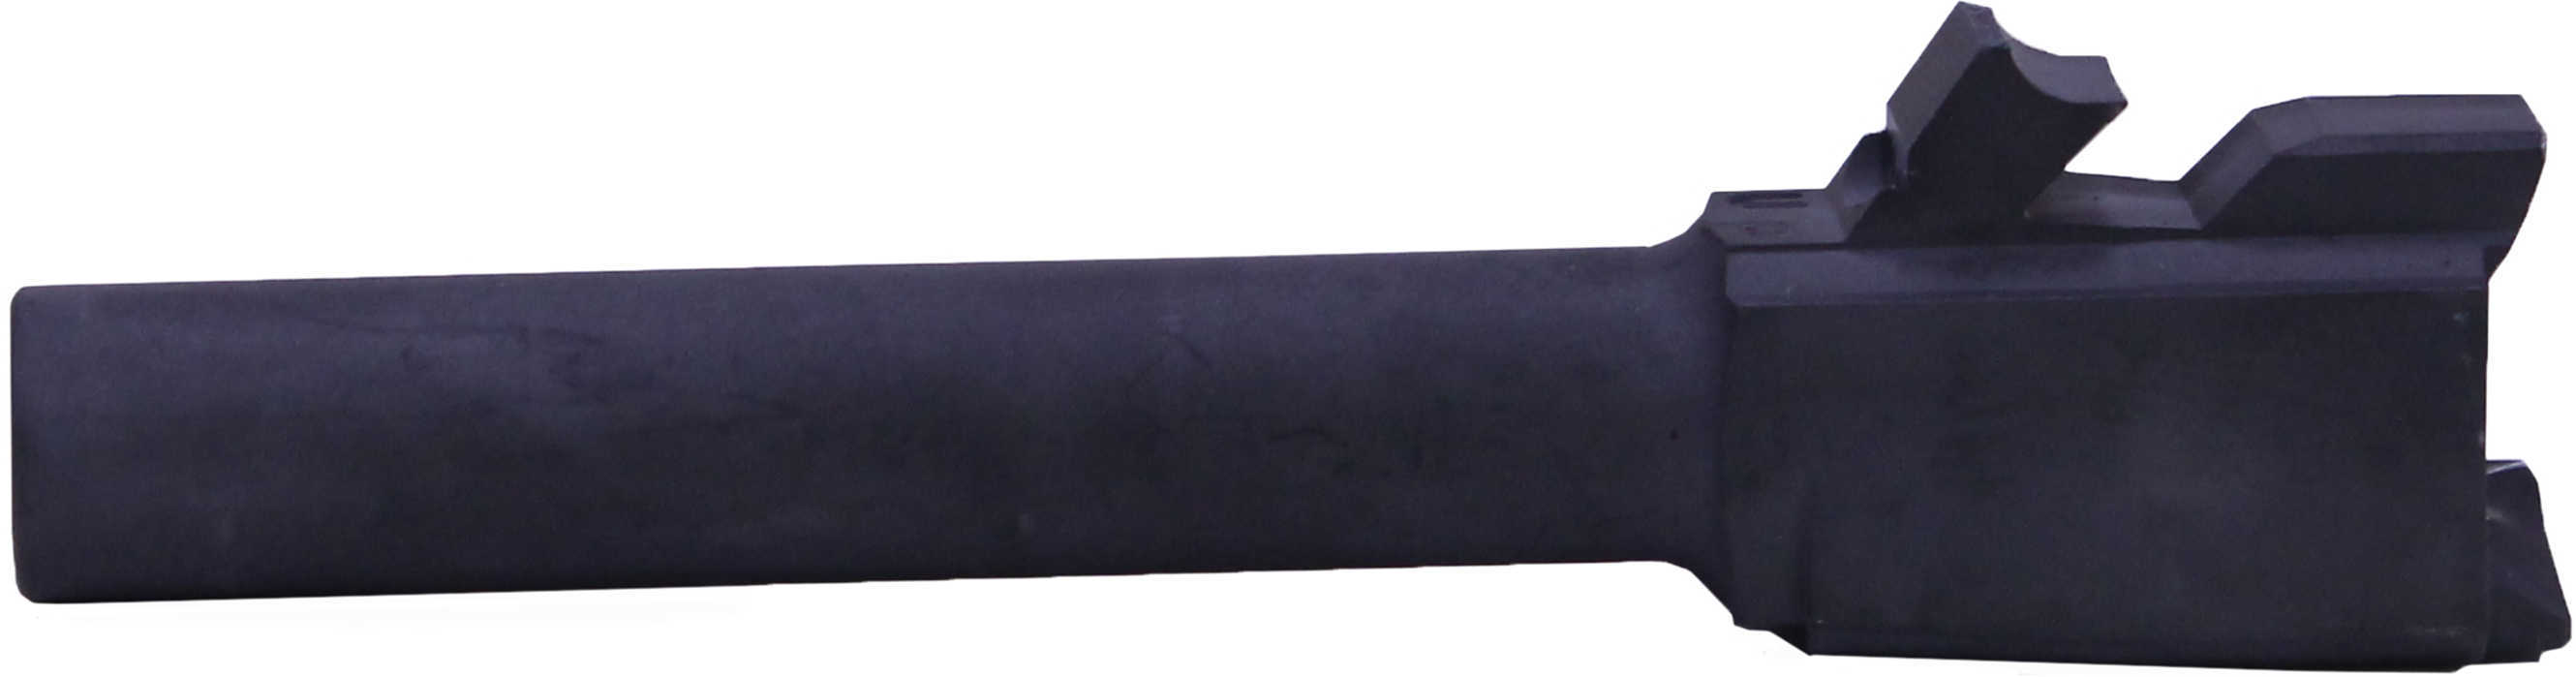 FN FNS/FNX 9 Barrel 4", Black Md: 67206-1